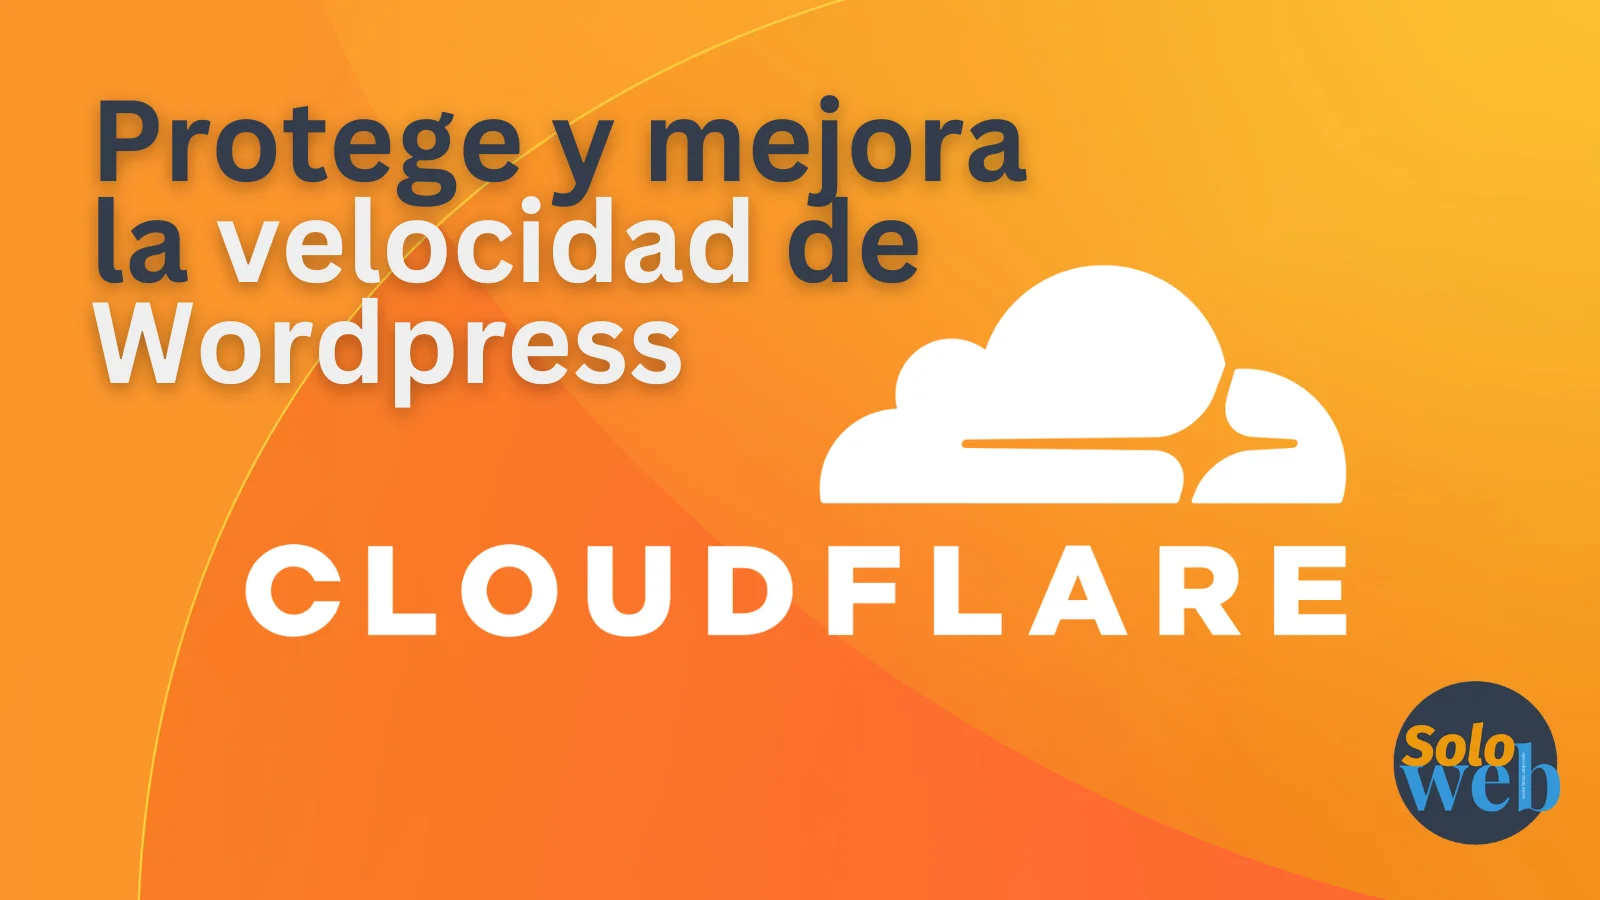 Acelera y protege tu Wordpress con CloudFlare